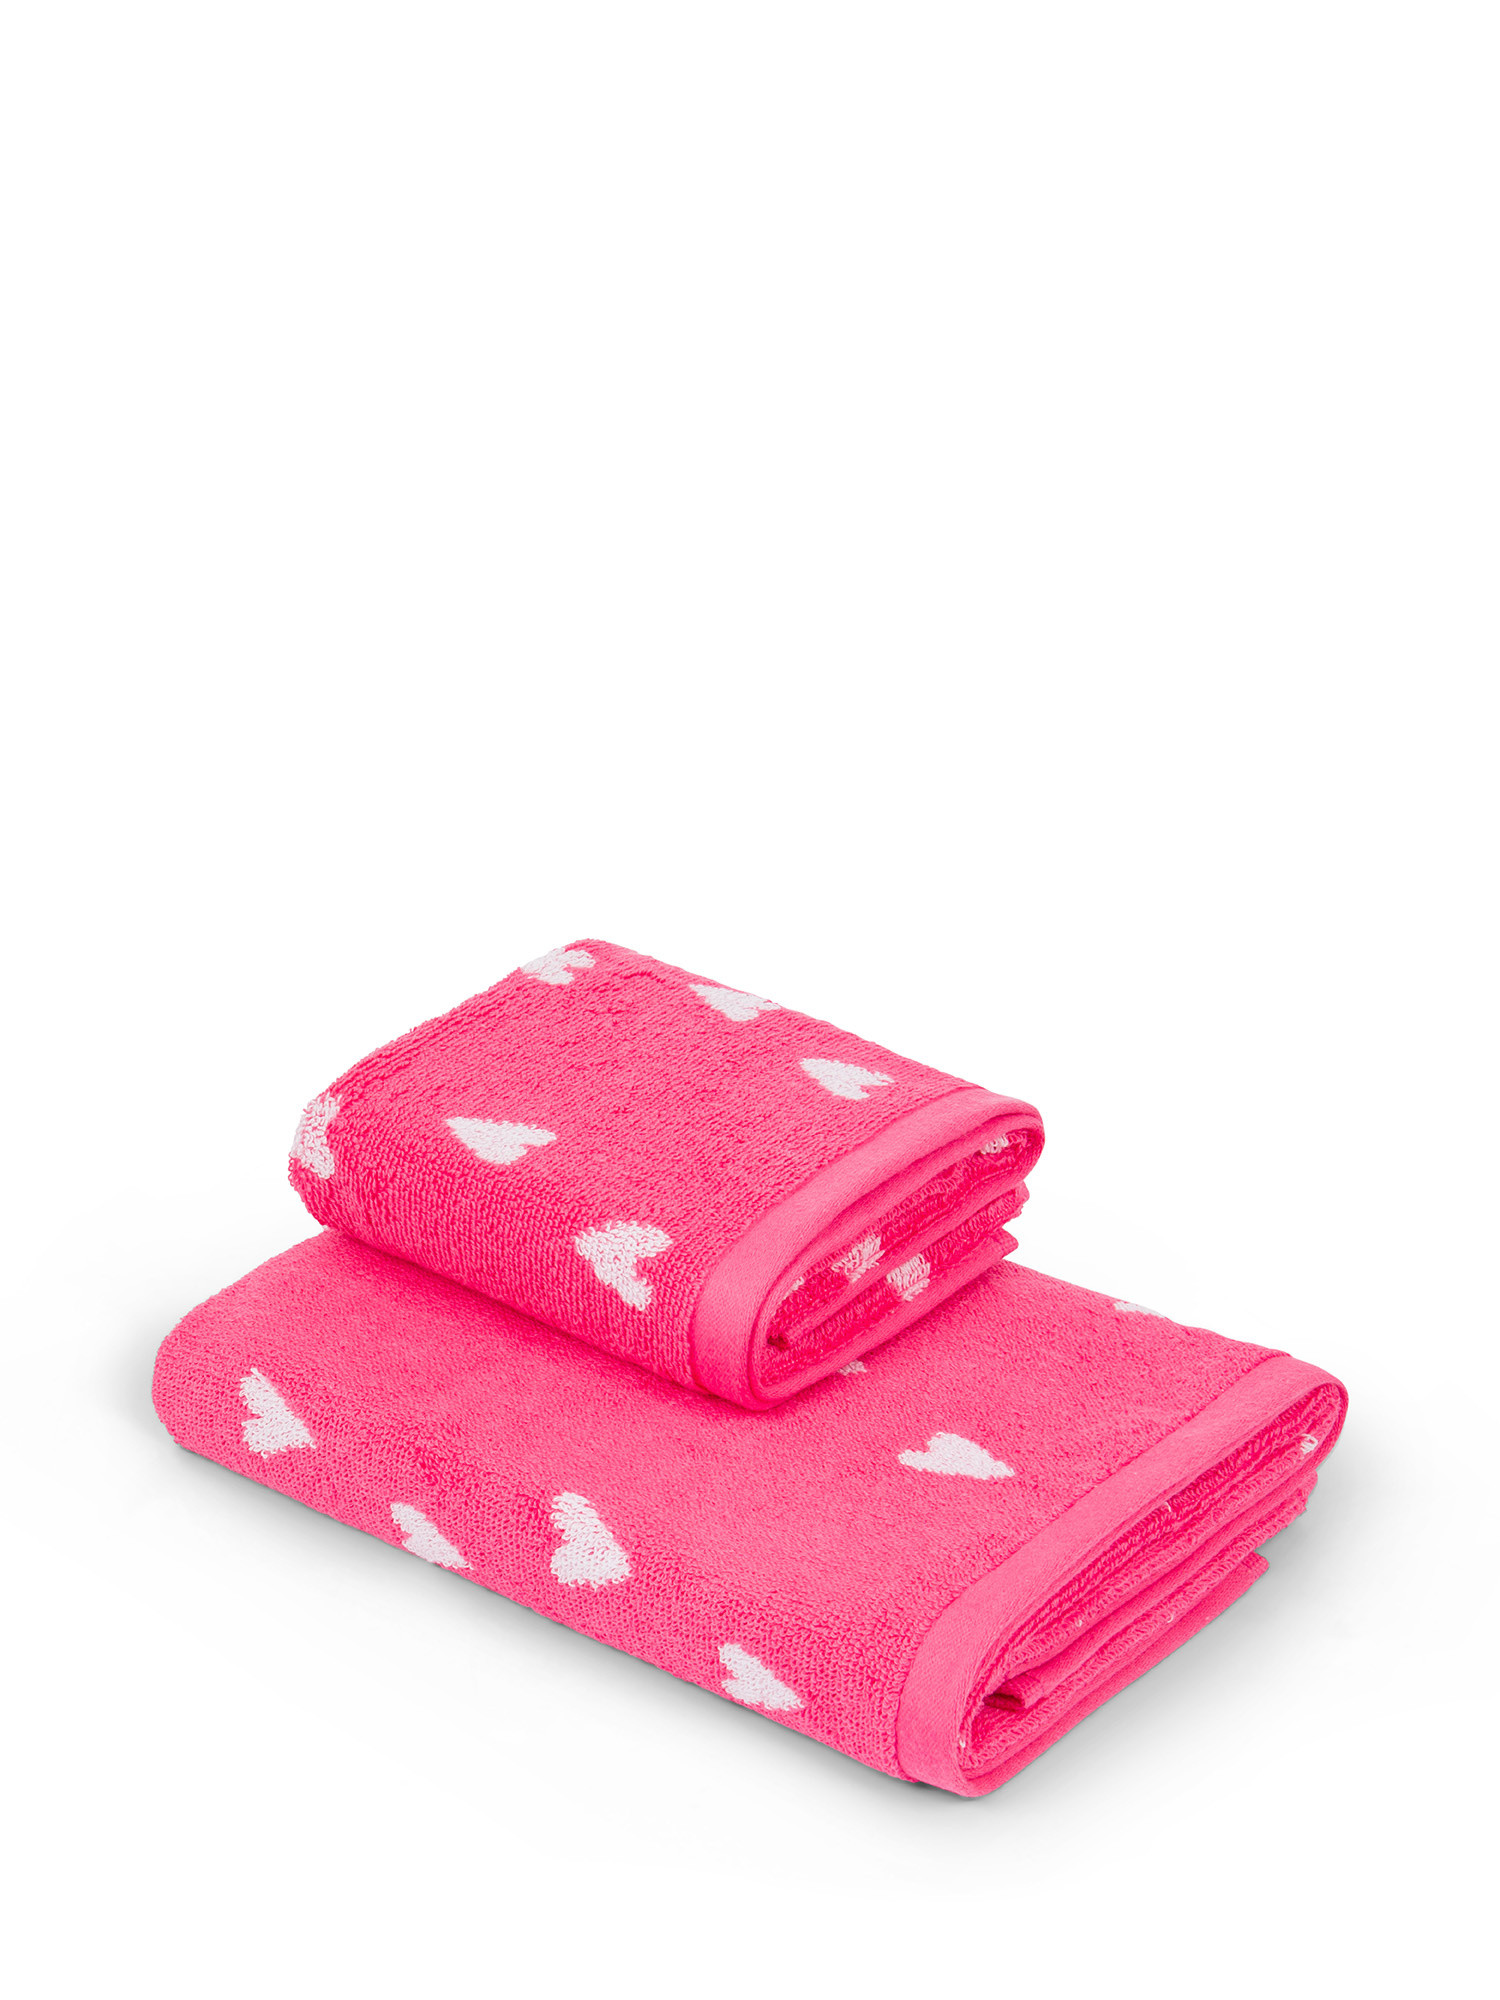 Asciugamano in spugna di cotone motivo cuoricini, Rosa, large image number 0